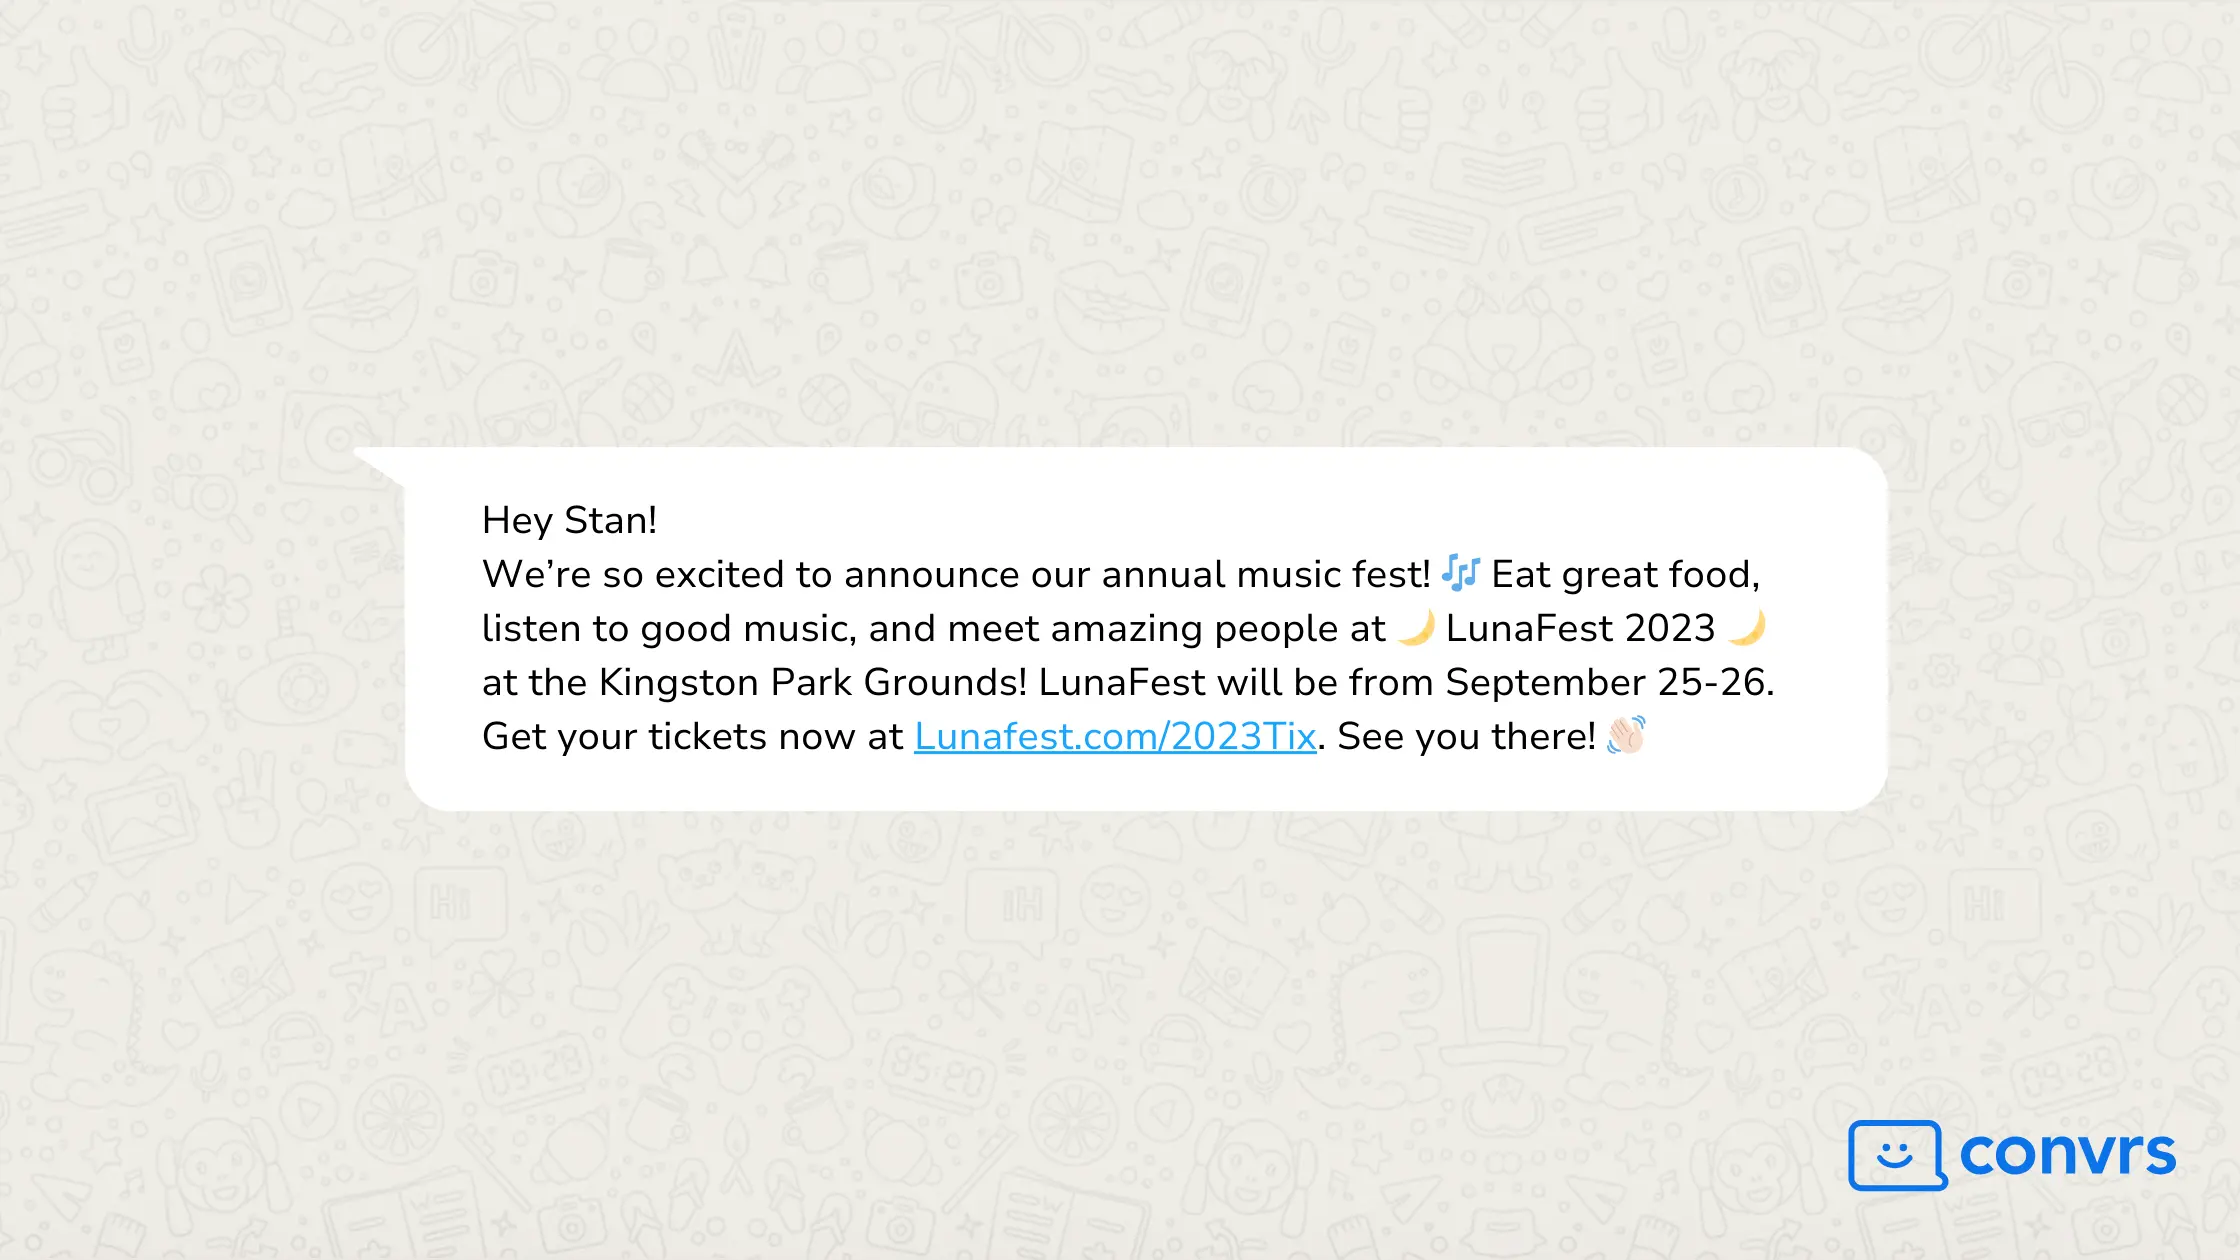 WhatsApp message showing a music festival announcement